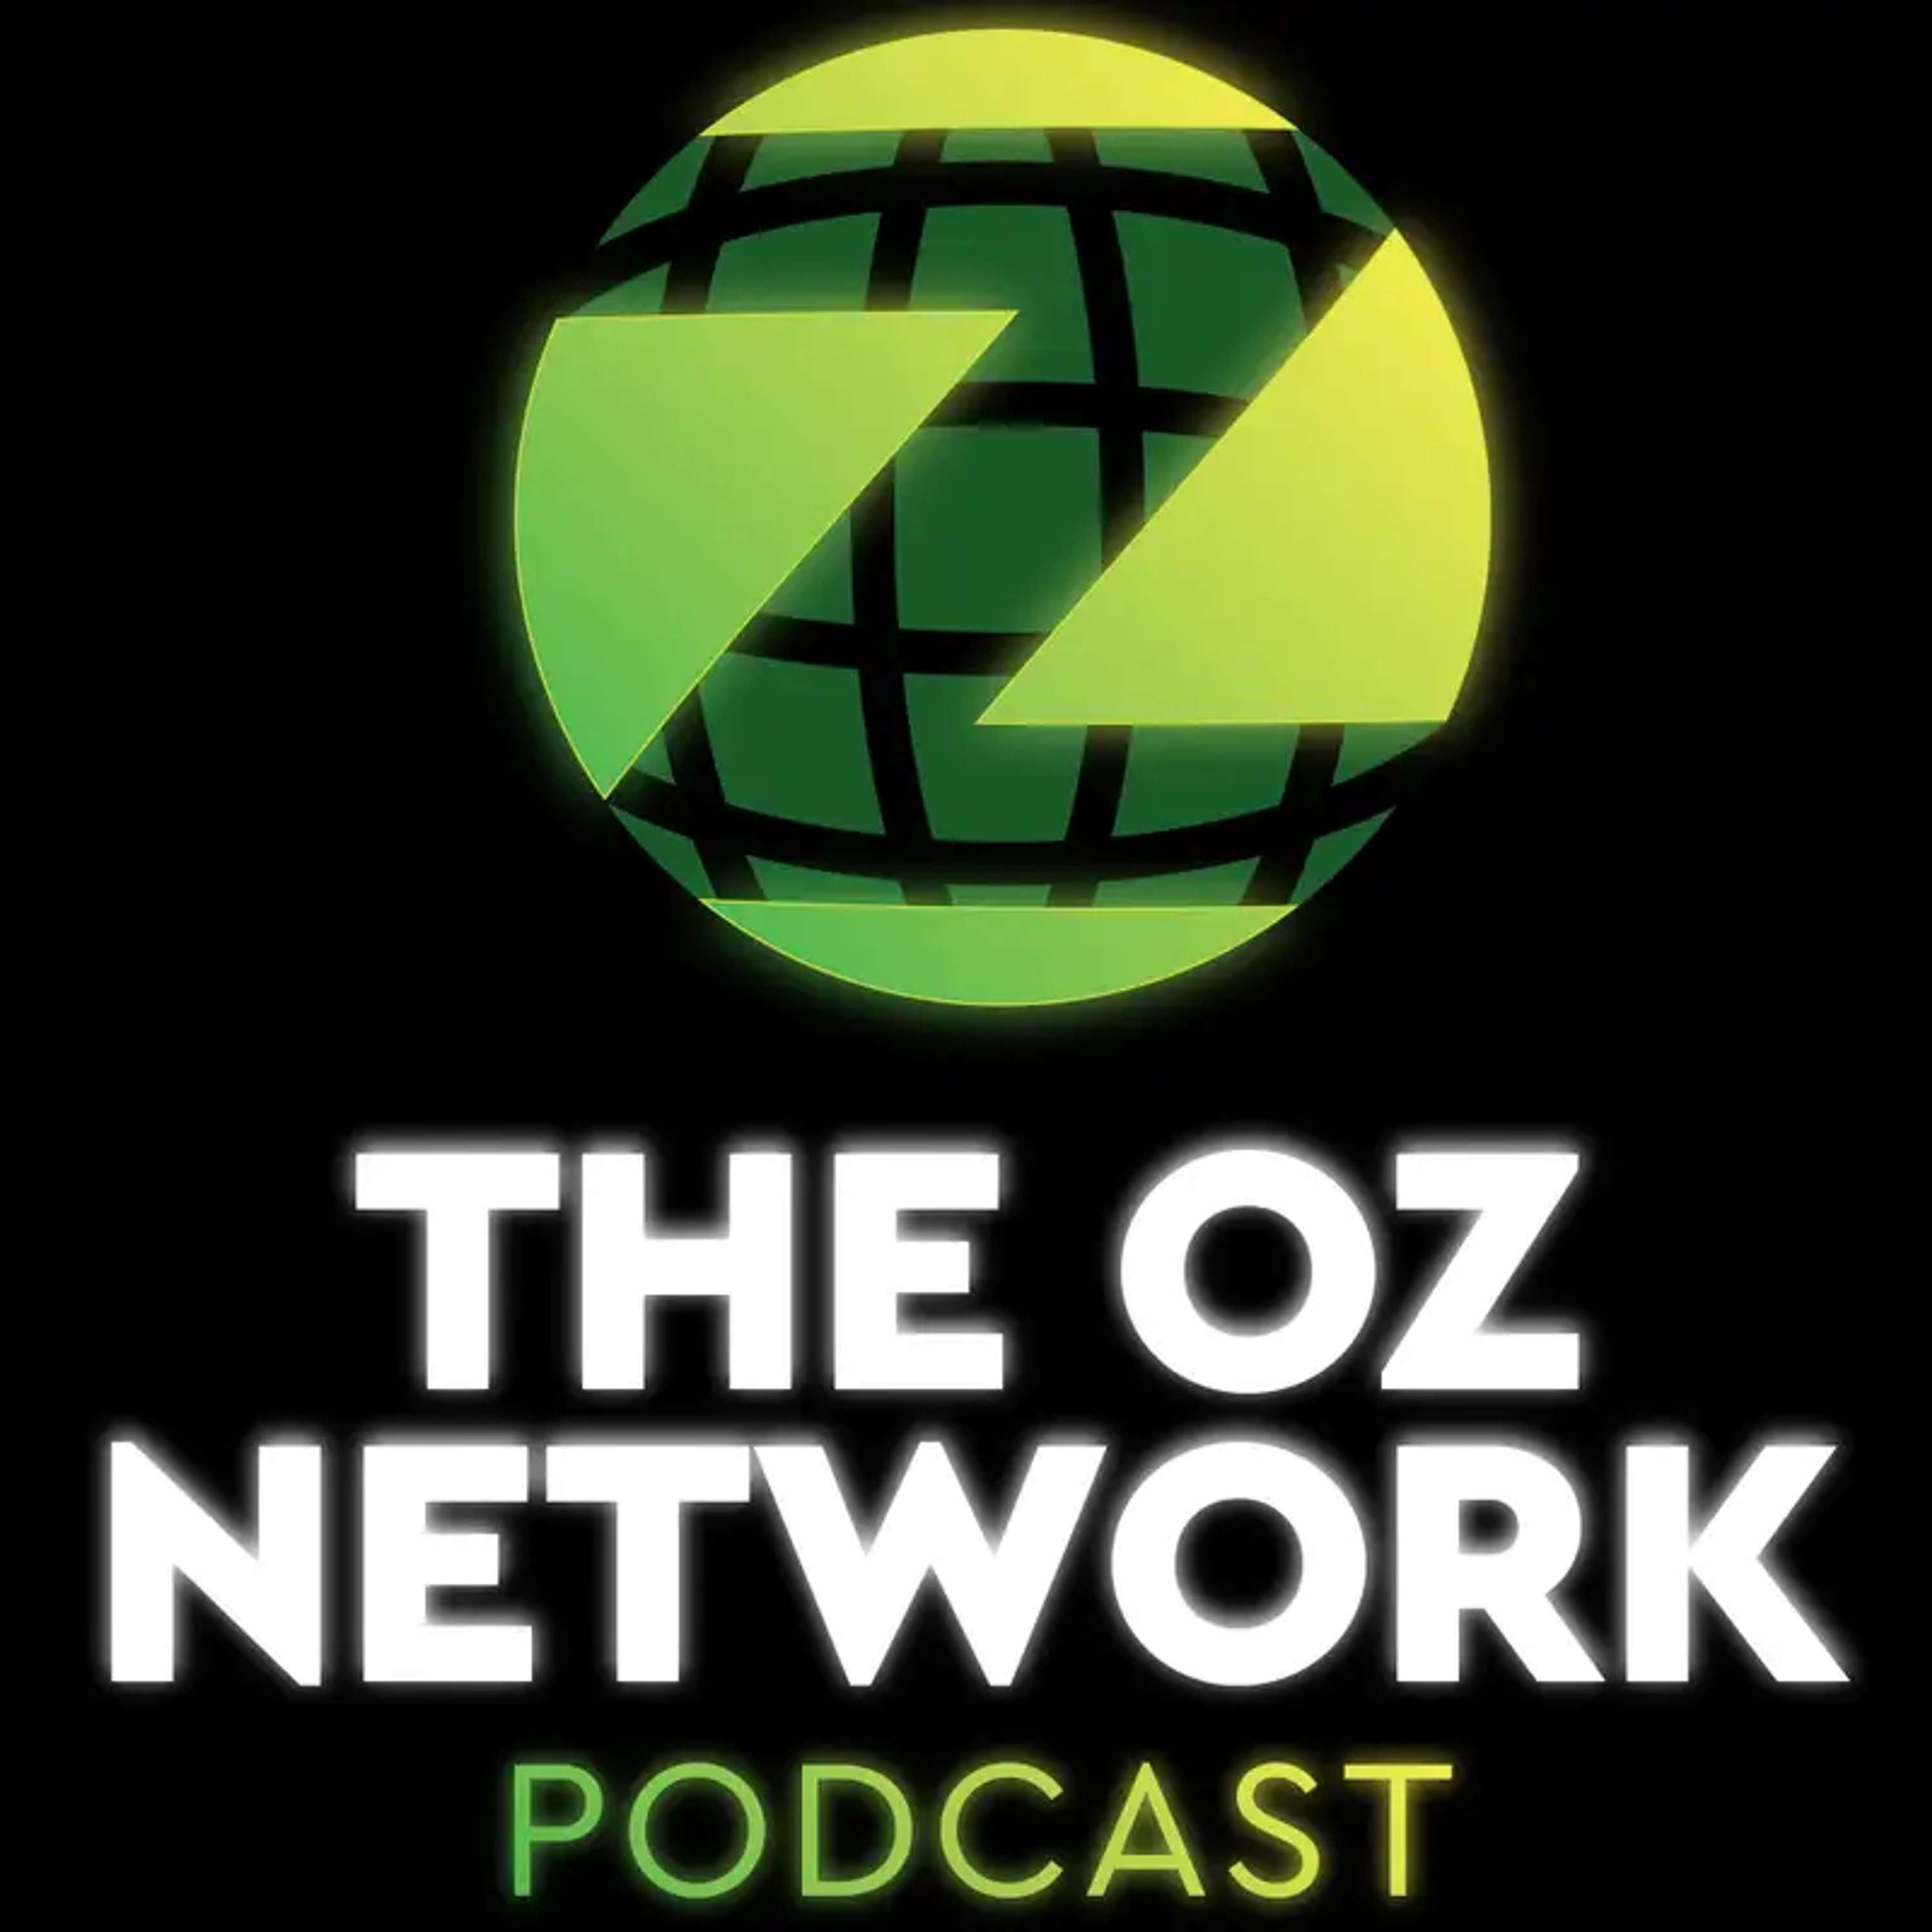 The Amazing Race Season 36, Episode 5 Recap - The Oz Network TV